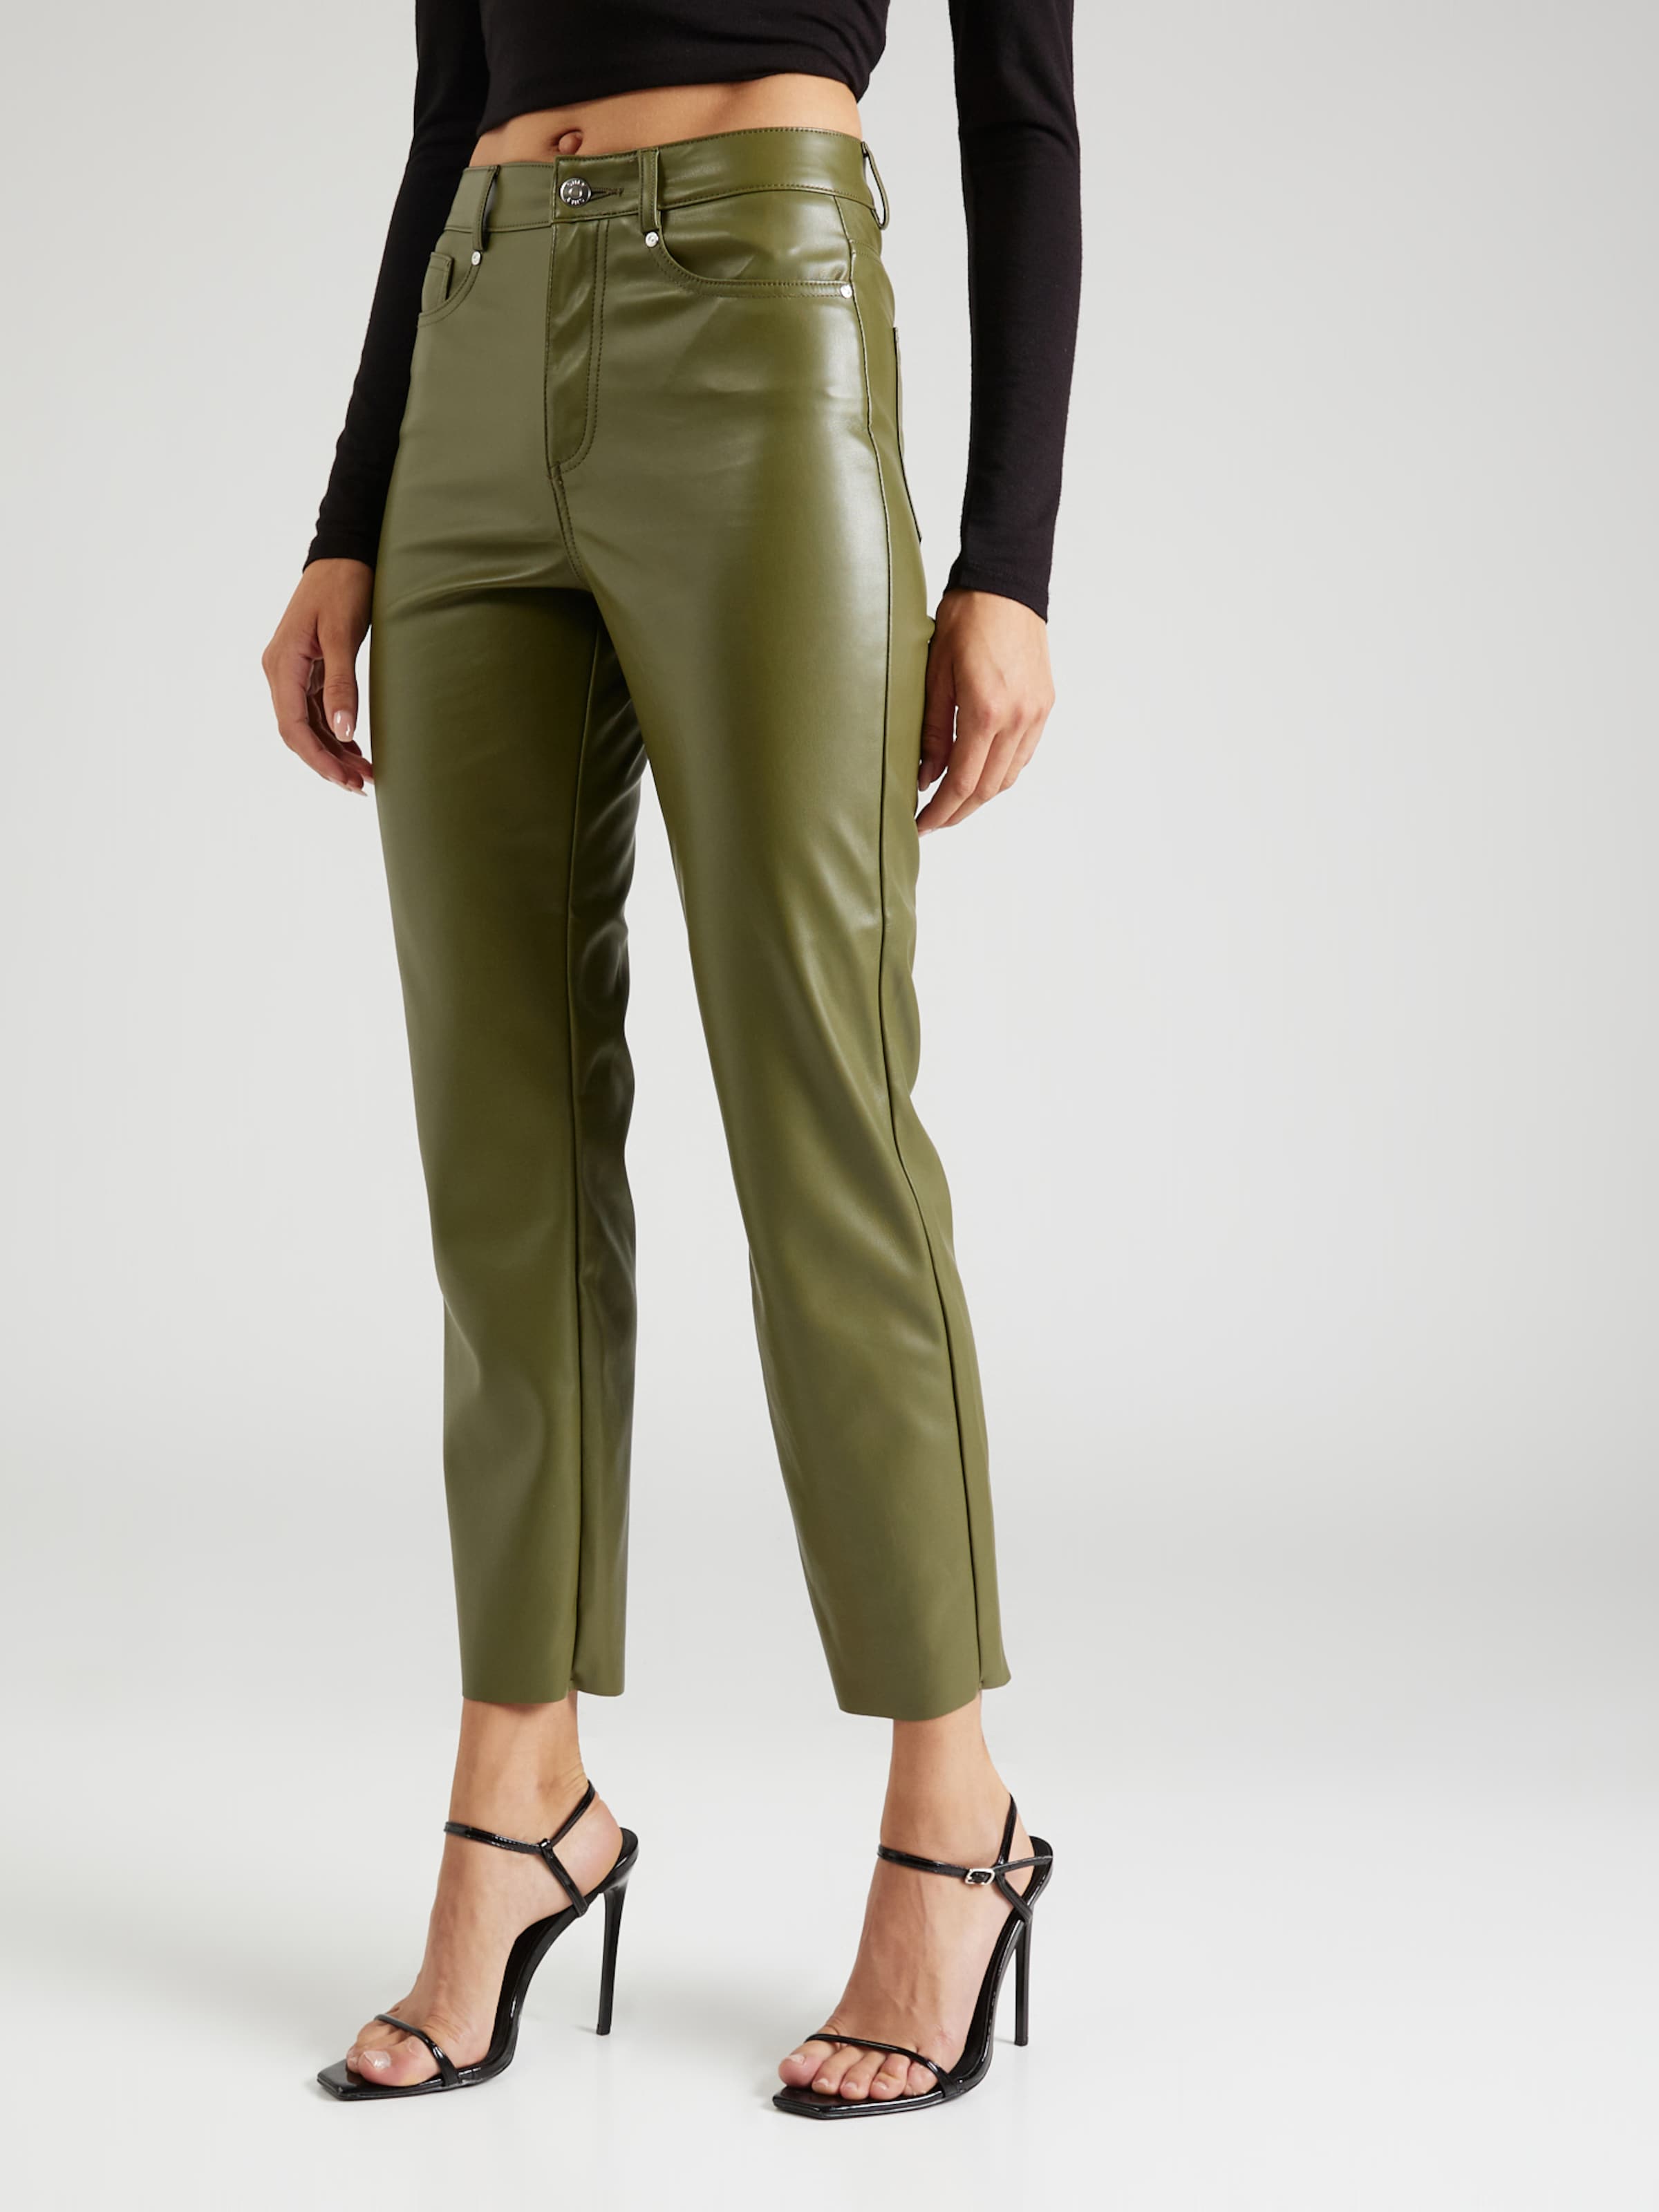 Womens Smart Culottes 3/4 Length Trousers Soft Day Pants Black 8-22 | eBay